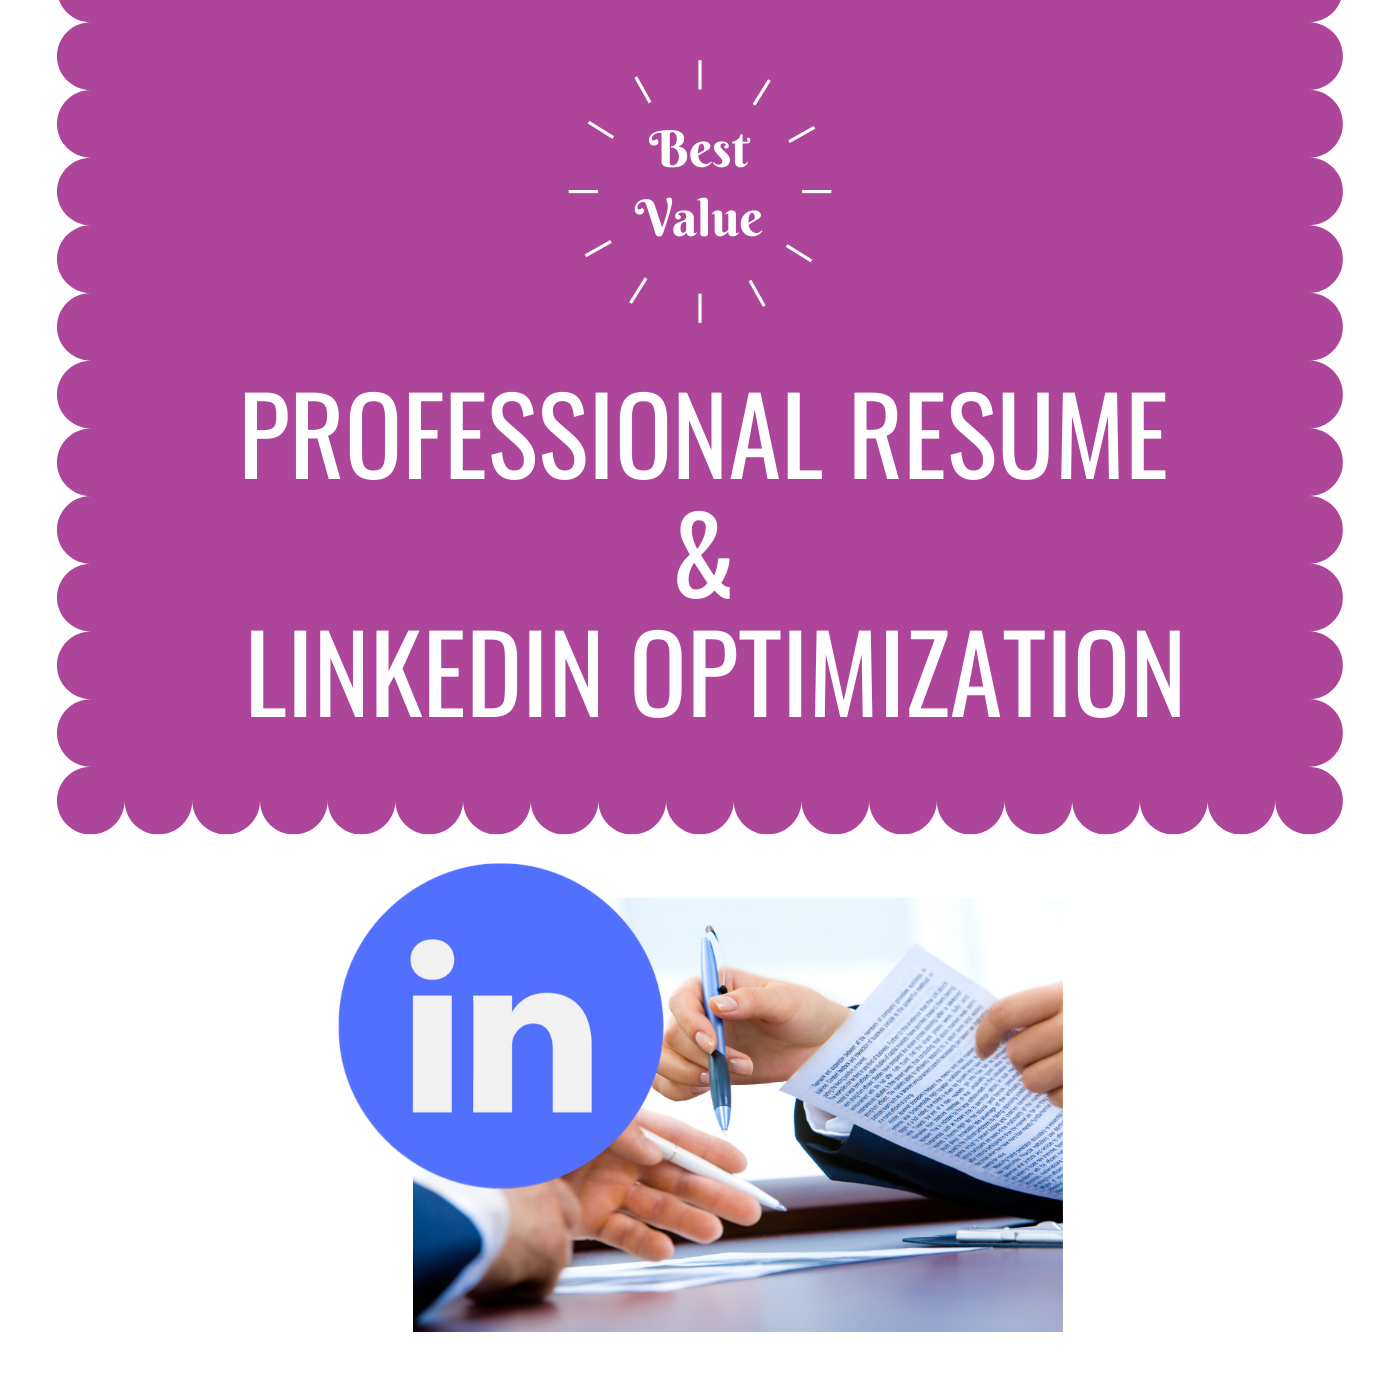 linkedin resume downloaded meaning